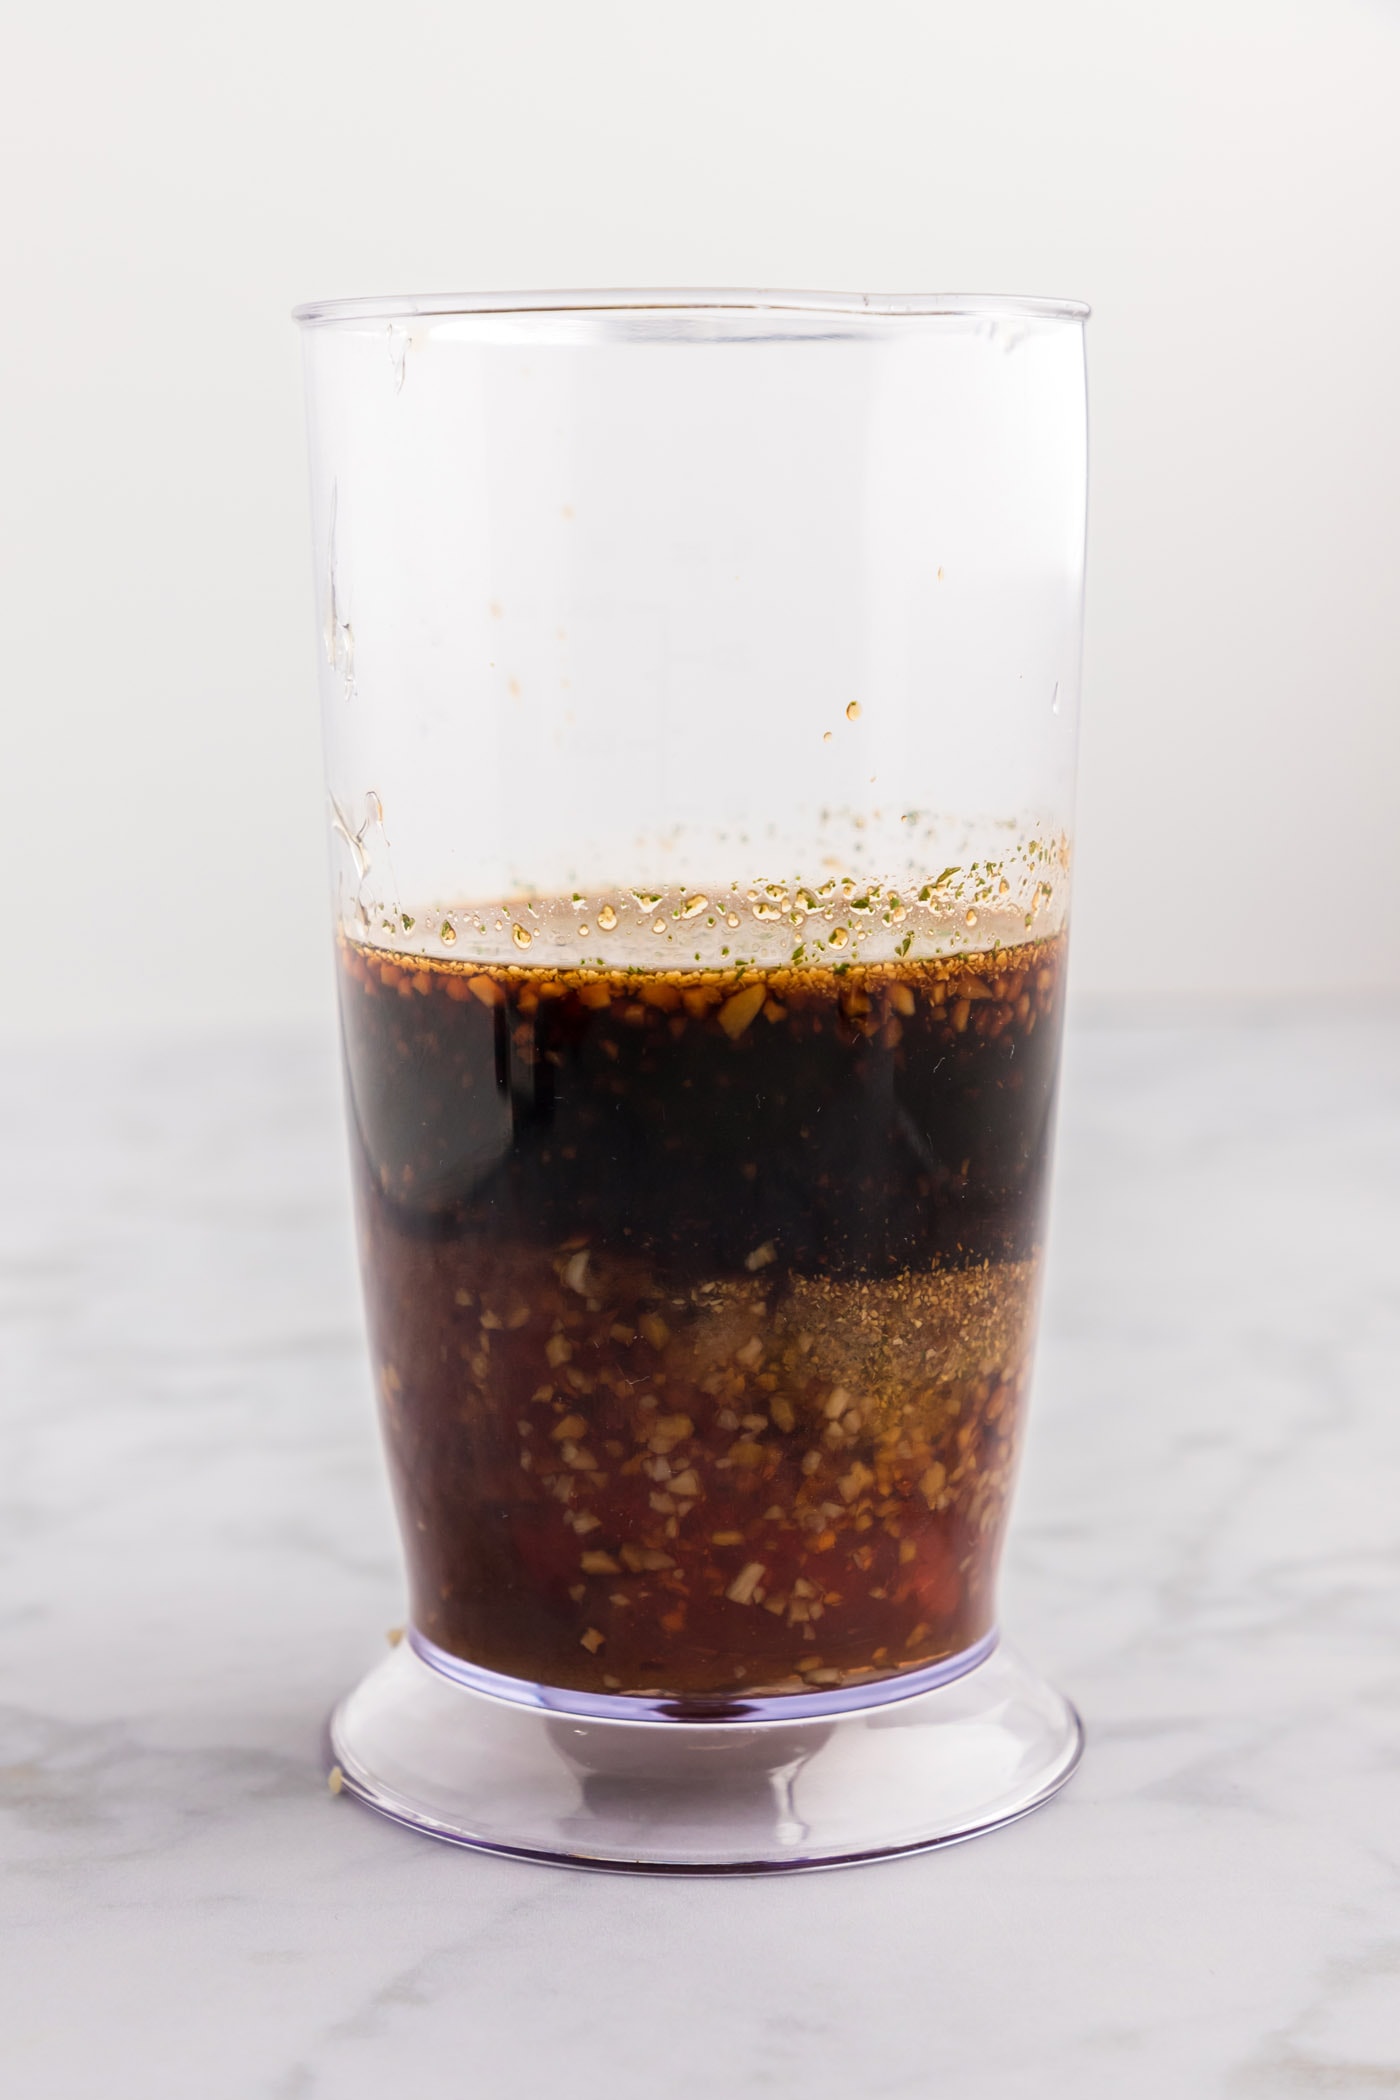 soy sauce, vinegar, garlic, brown sugar, and honey in an immersion blender